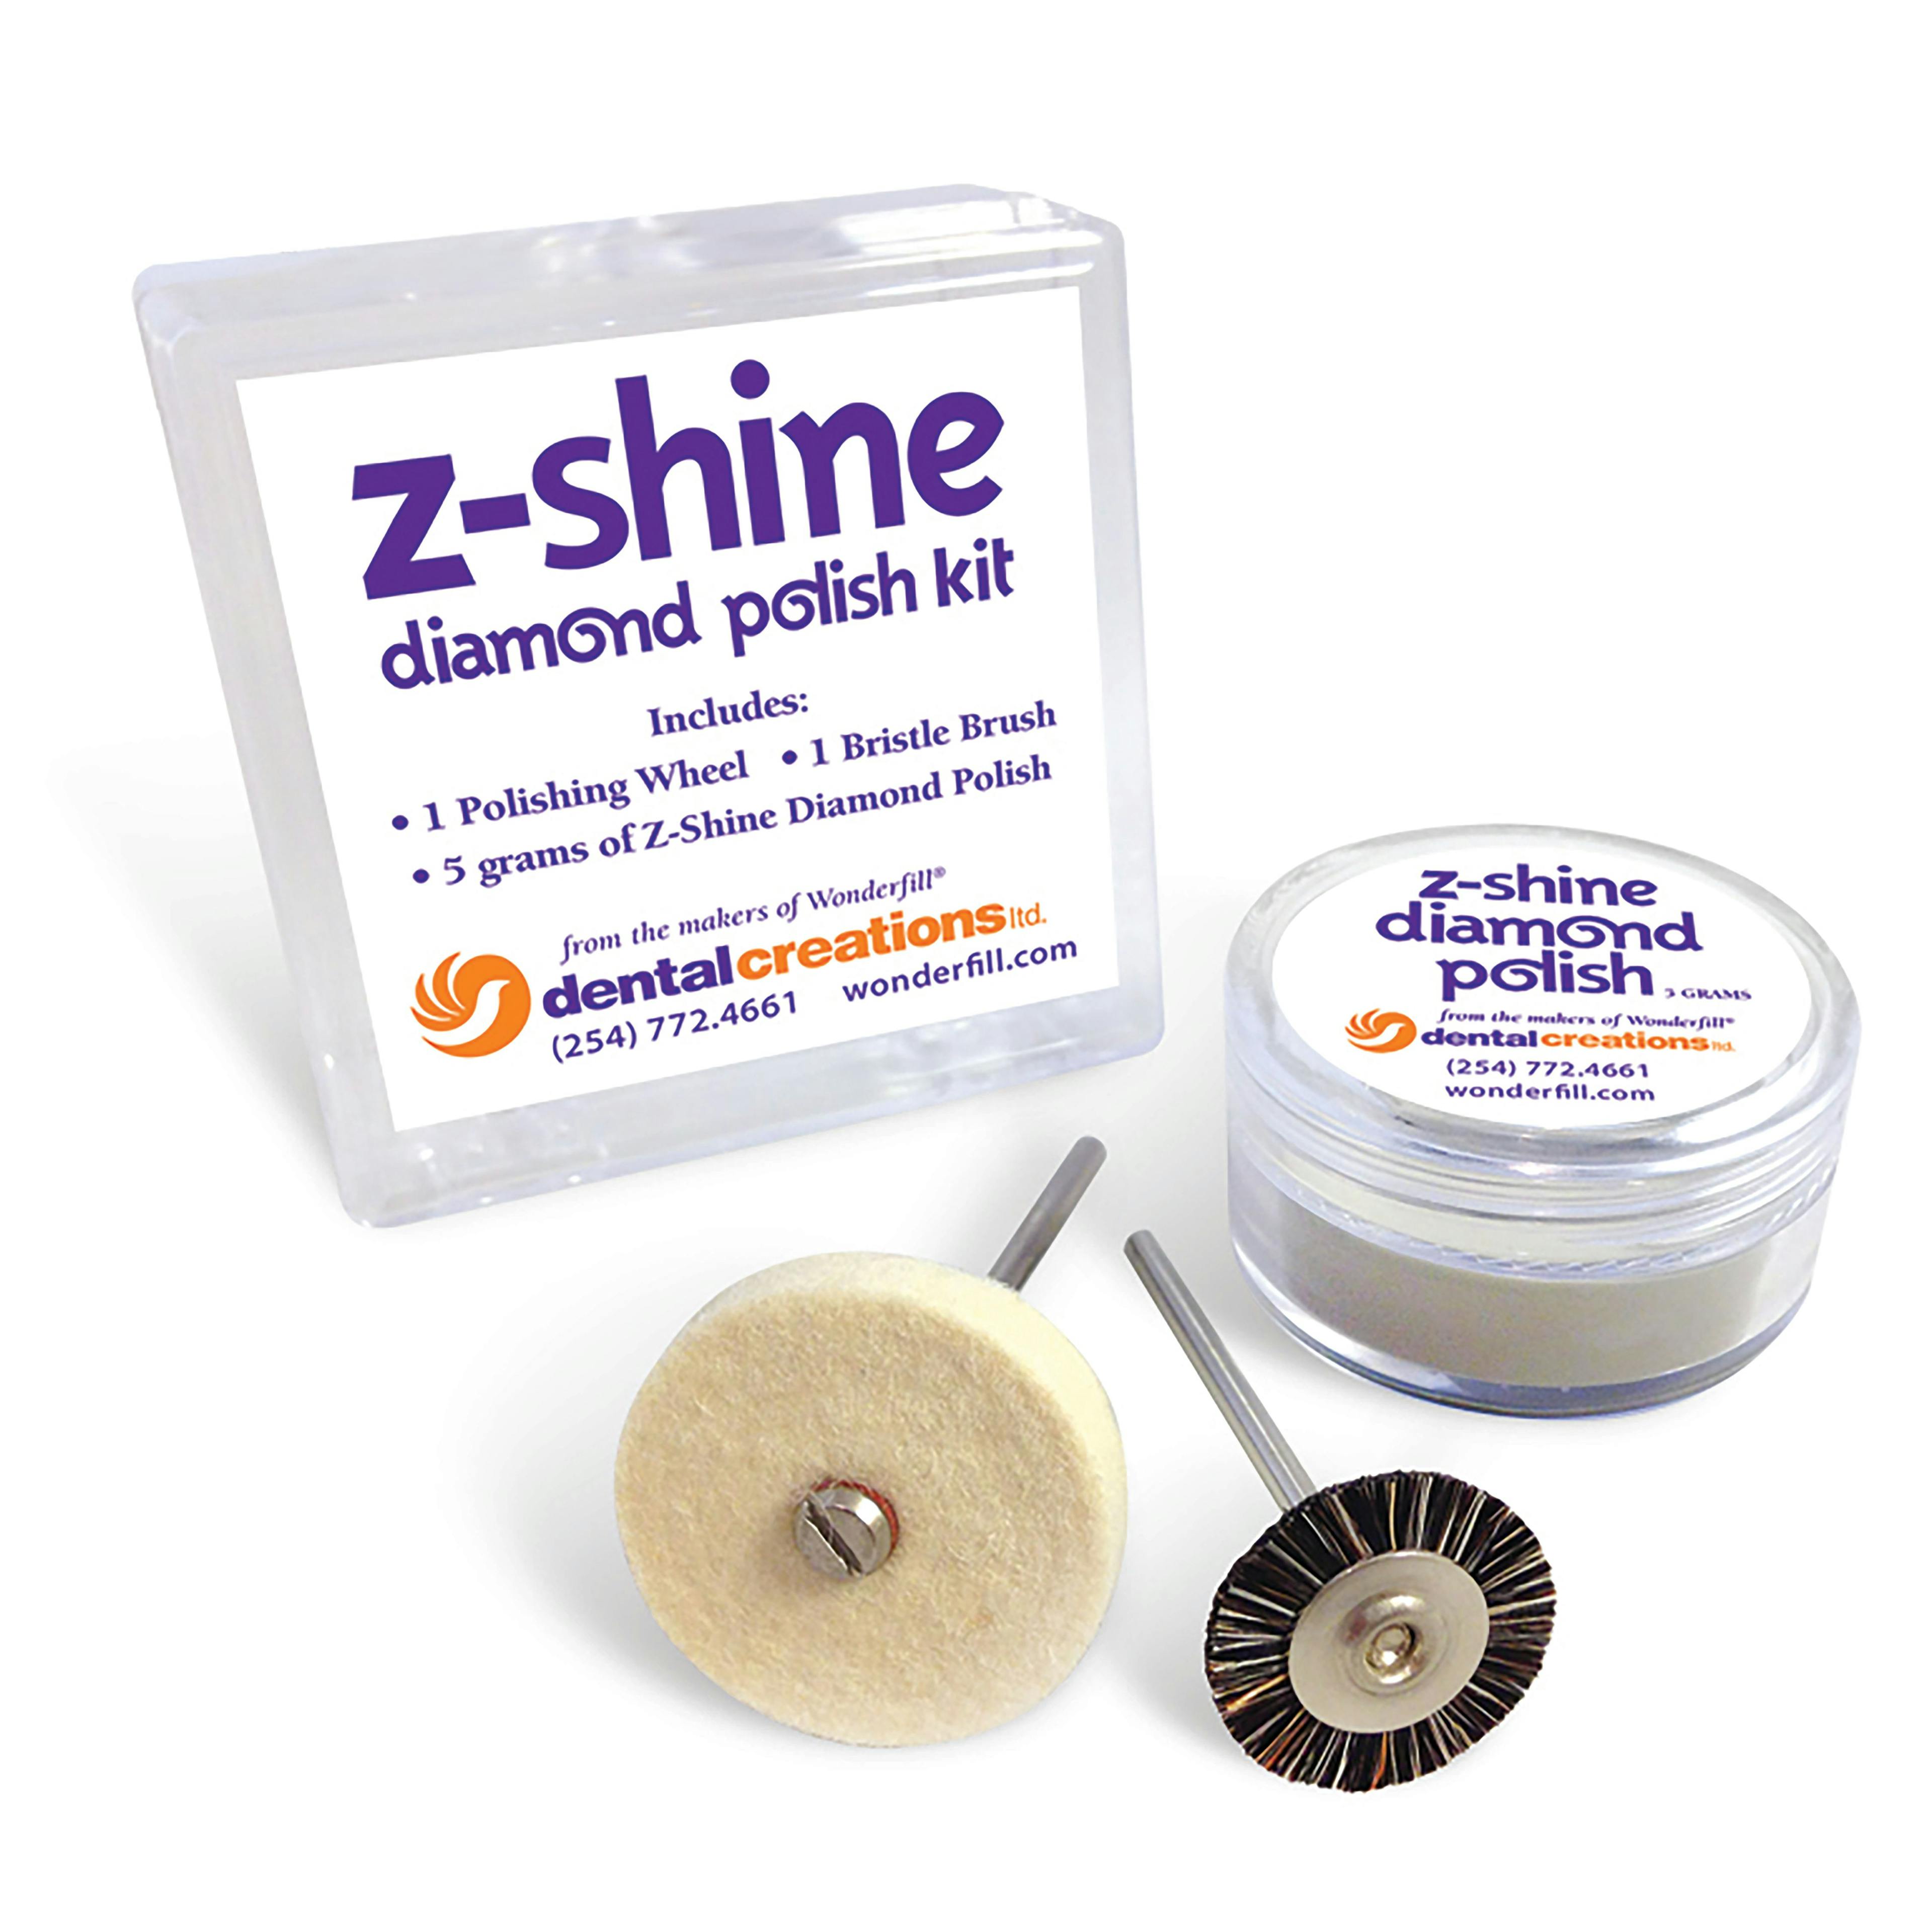 Dental Creations' Z-Shine